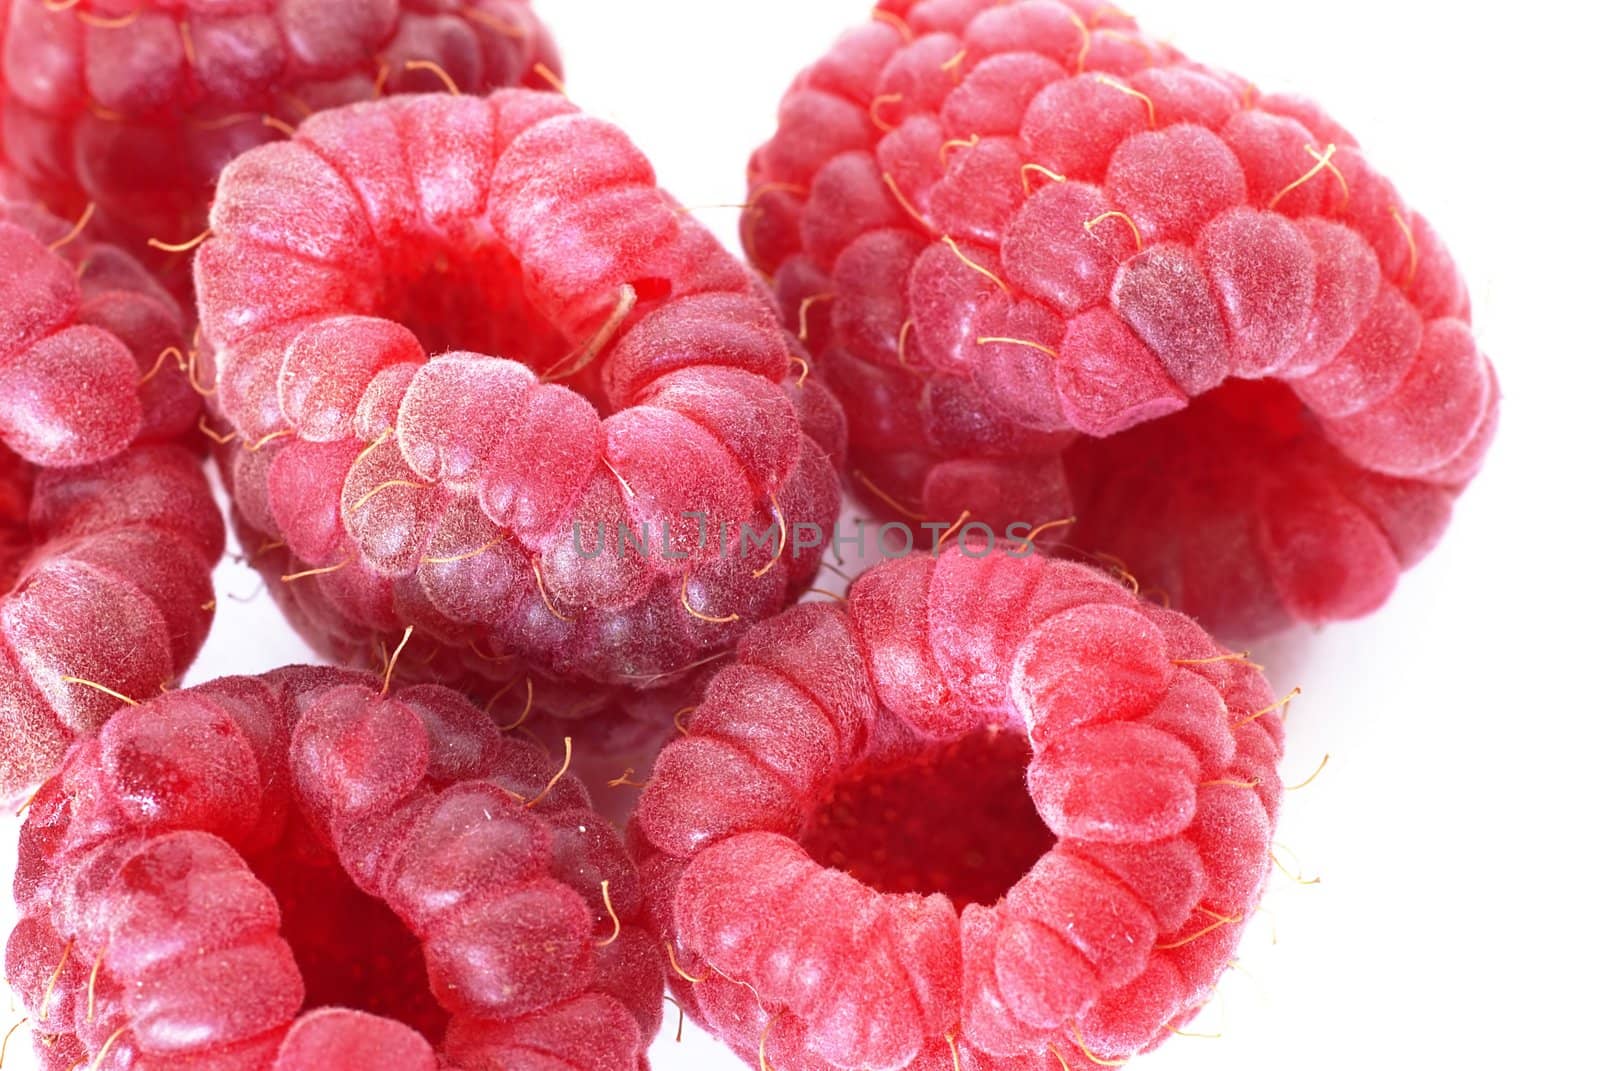 Red raspberries by simply